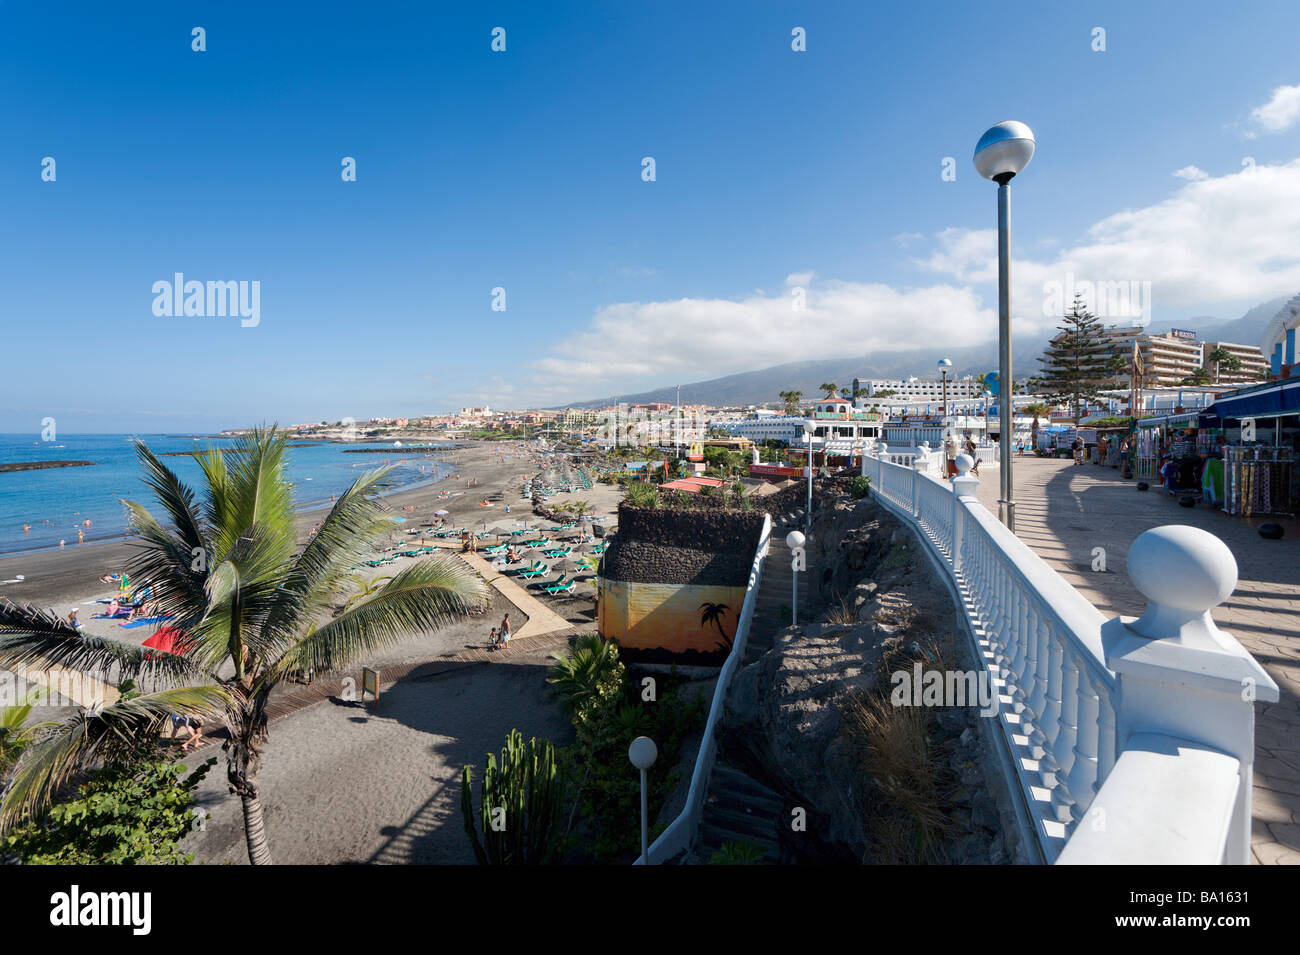 La spiaggia e il lungomare, Playa Torviscas Costa Adeje, Playa de las Americas, Tenerife, Isole Canarie, Spagna Foto Stock